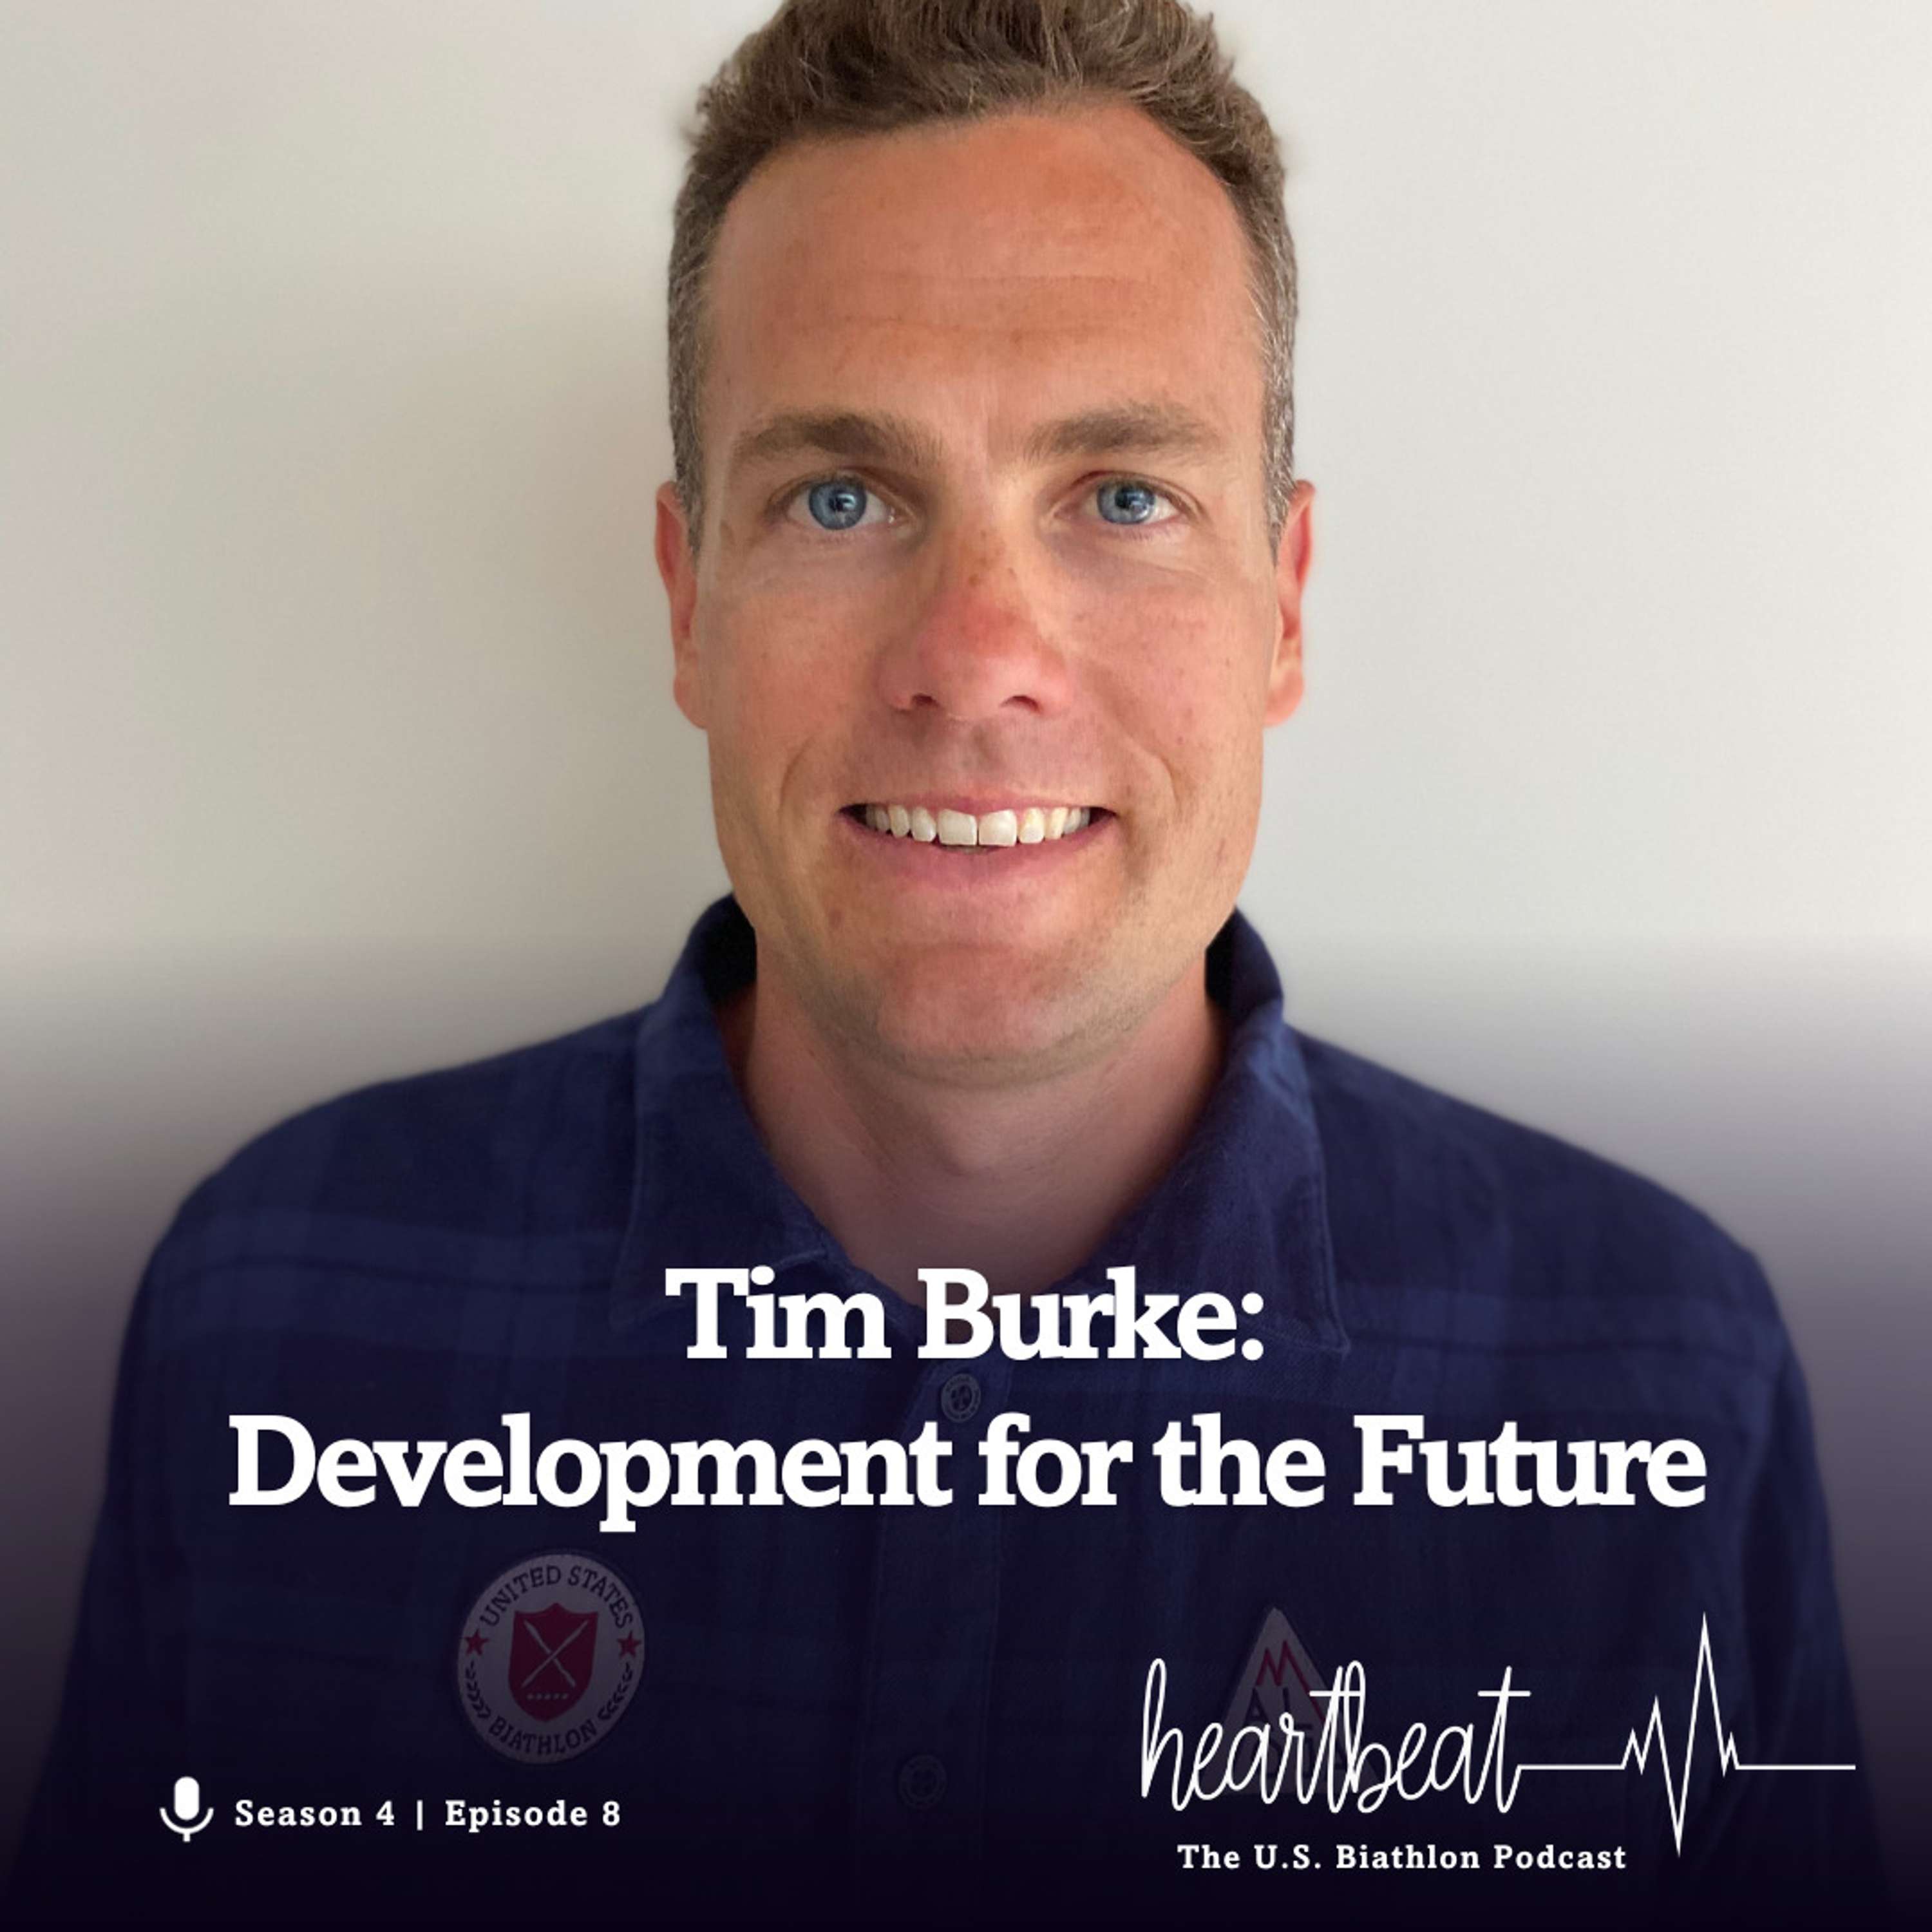 Tim Burke: Development for the Future